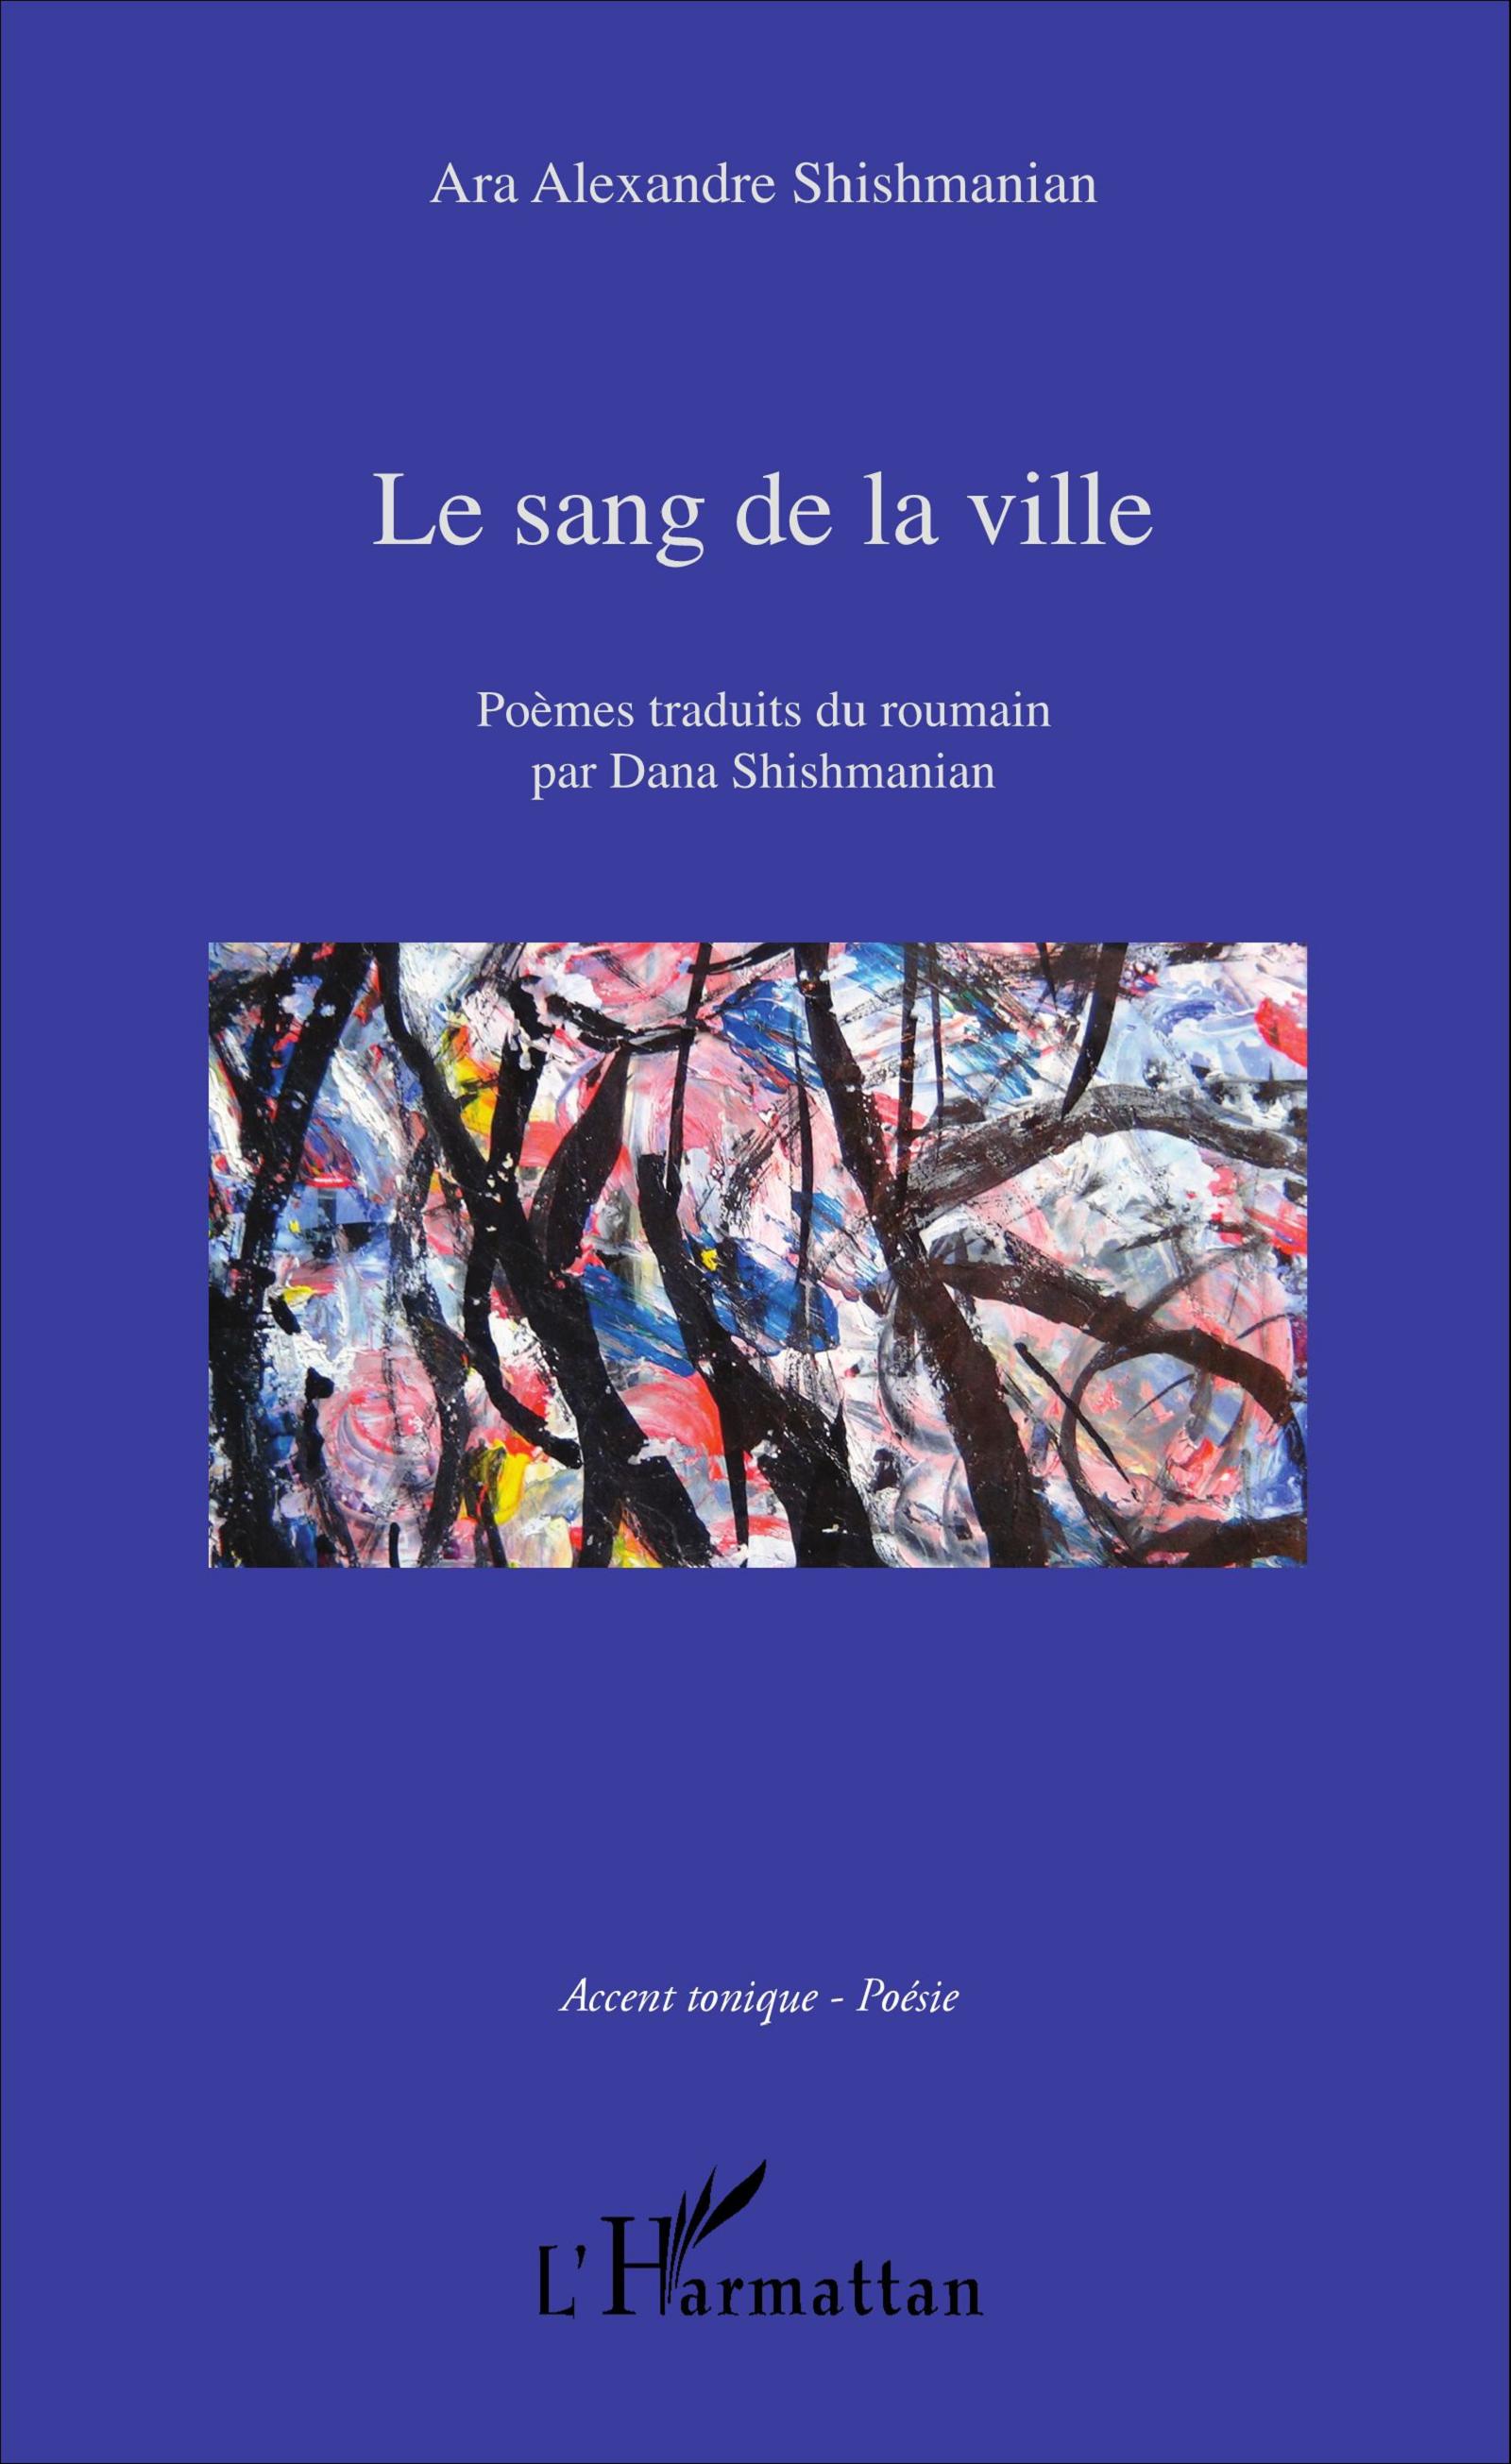 Ara Alexandre SHISHMANIAN, "Le sang de la ville" - Poèmes traduits du roumain par Dana Shishmanian, L’Harmattan, 2016